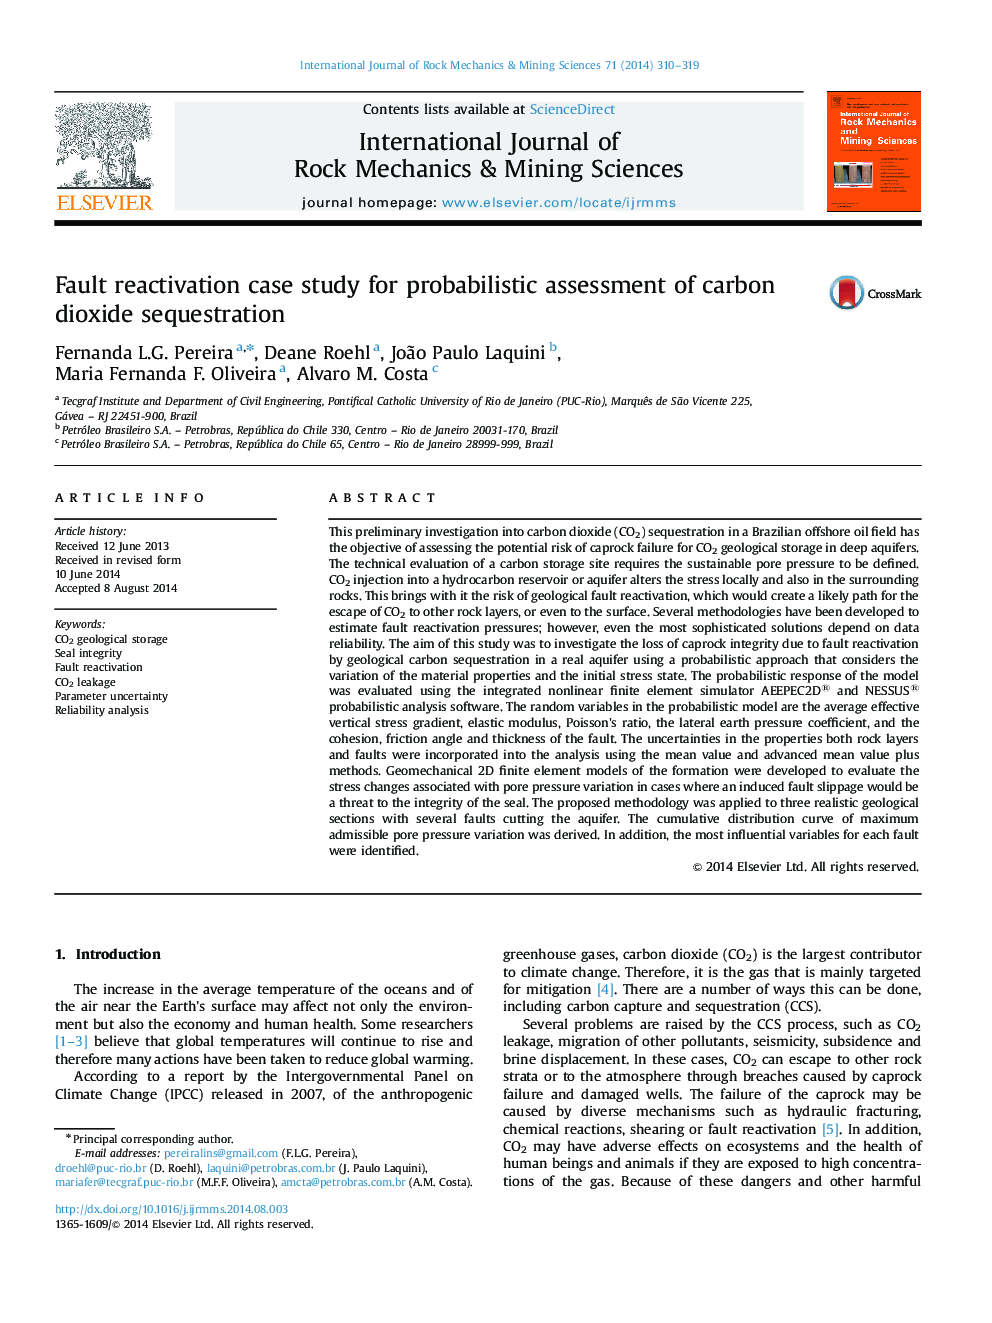 Fault reactivation case study for probabilistic assessment of carbon dioxide sequestration